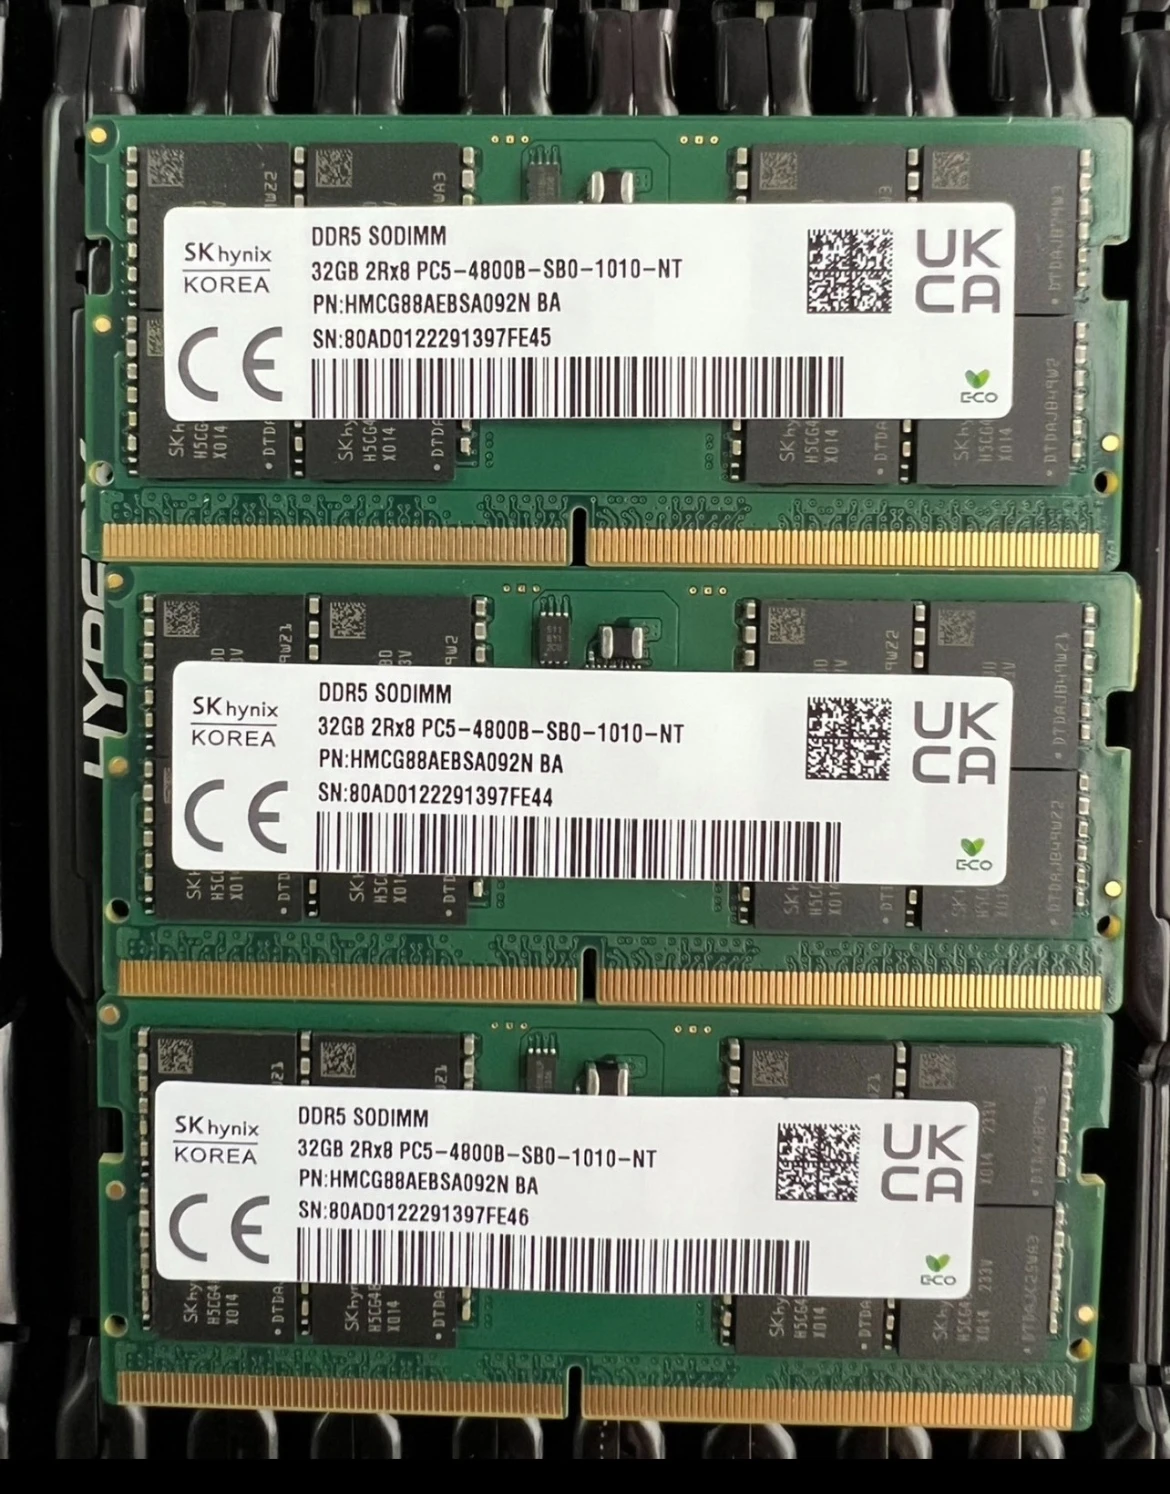 DDR5 SODIMM Ʈ ޸, 32GB, 4800MHz, 2RX8 PC5-4800B-SB0-1010-NT, 1 